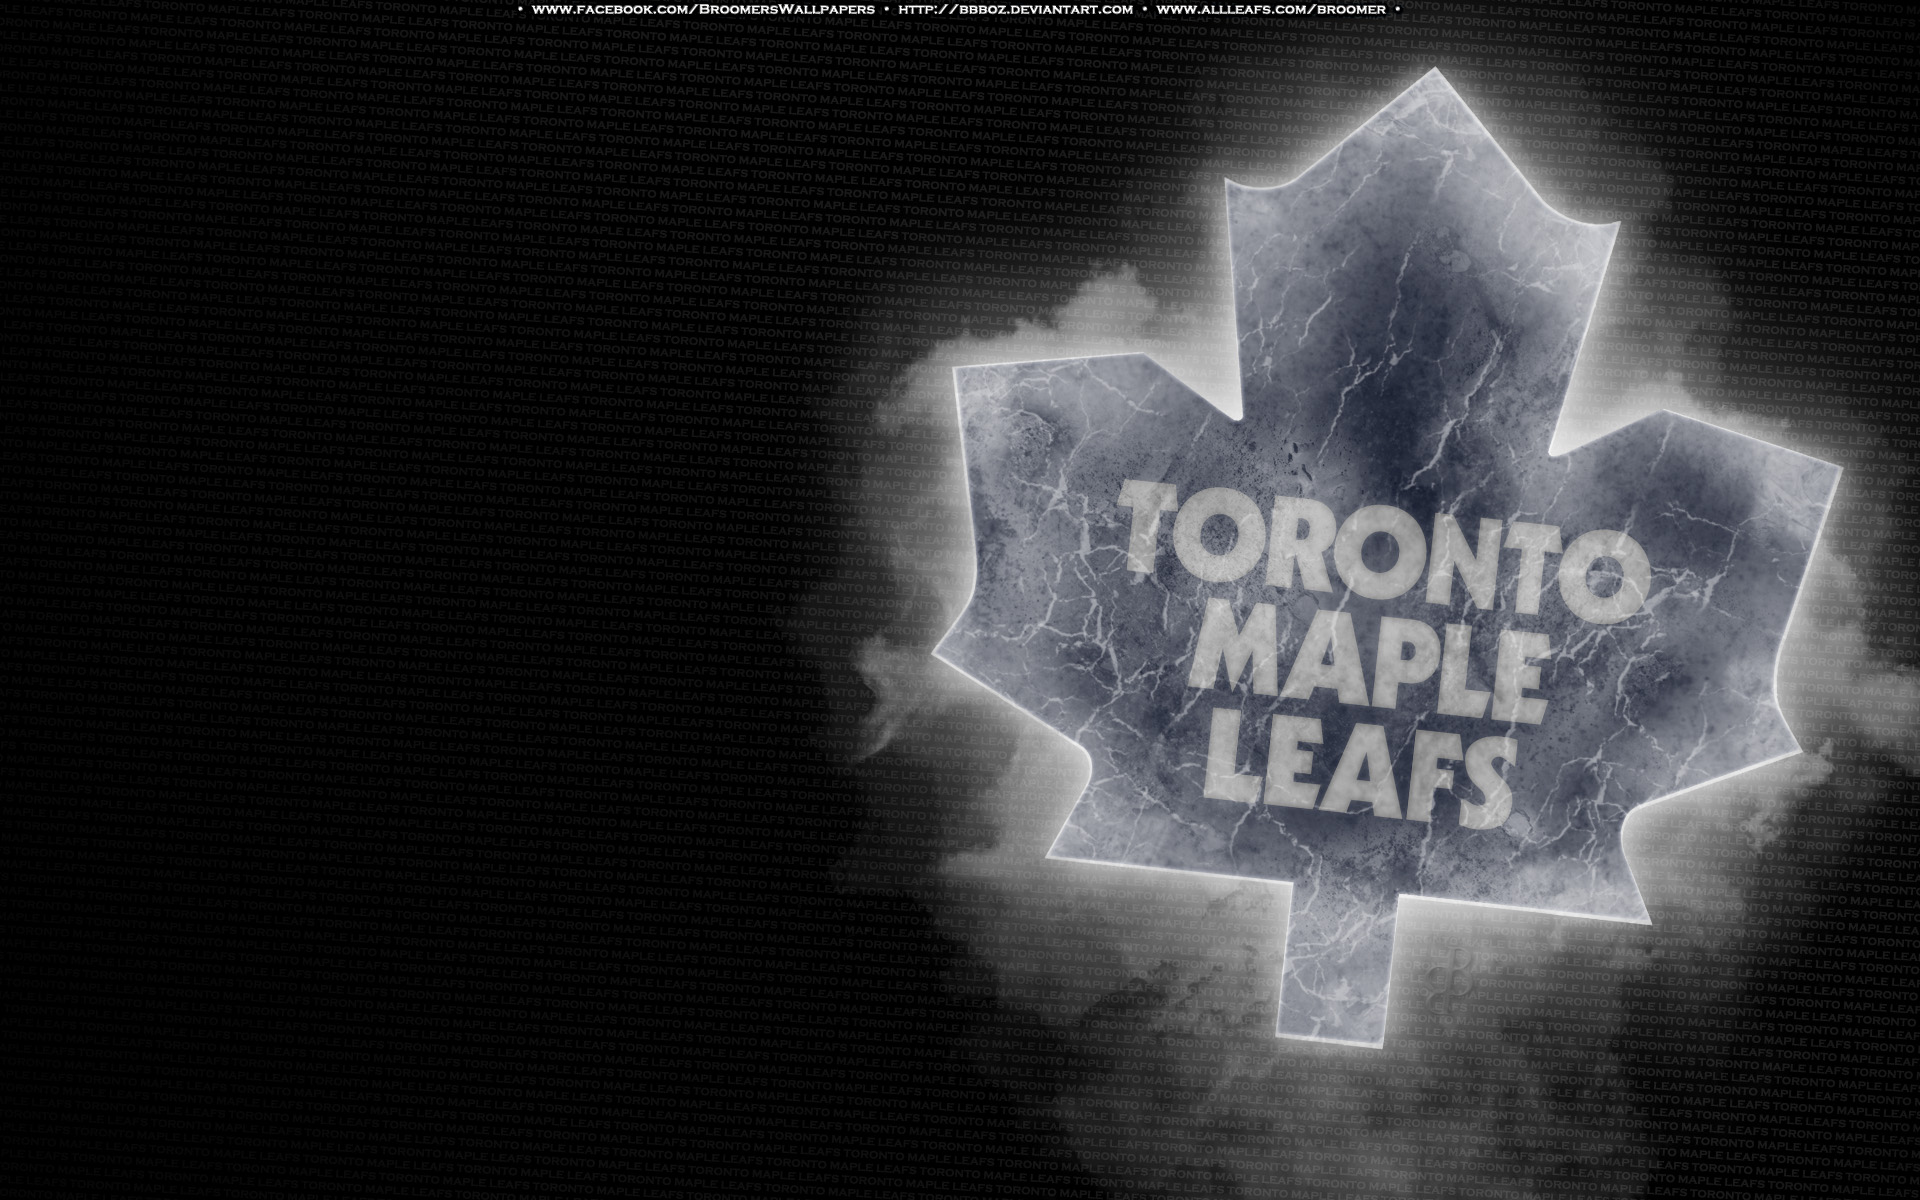 toronto maple leafs, sports, emblem, logo, nhl, hockey